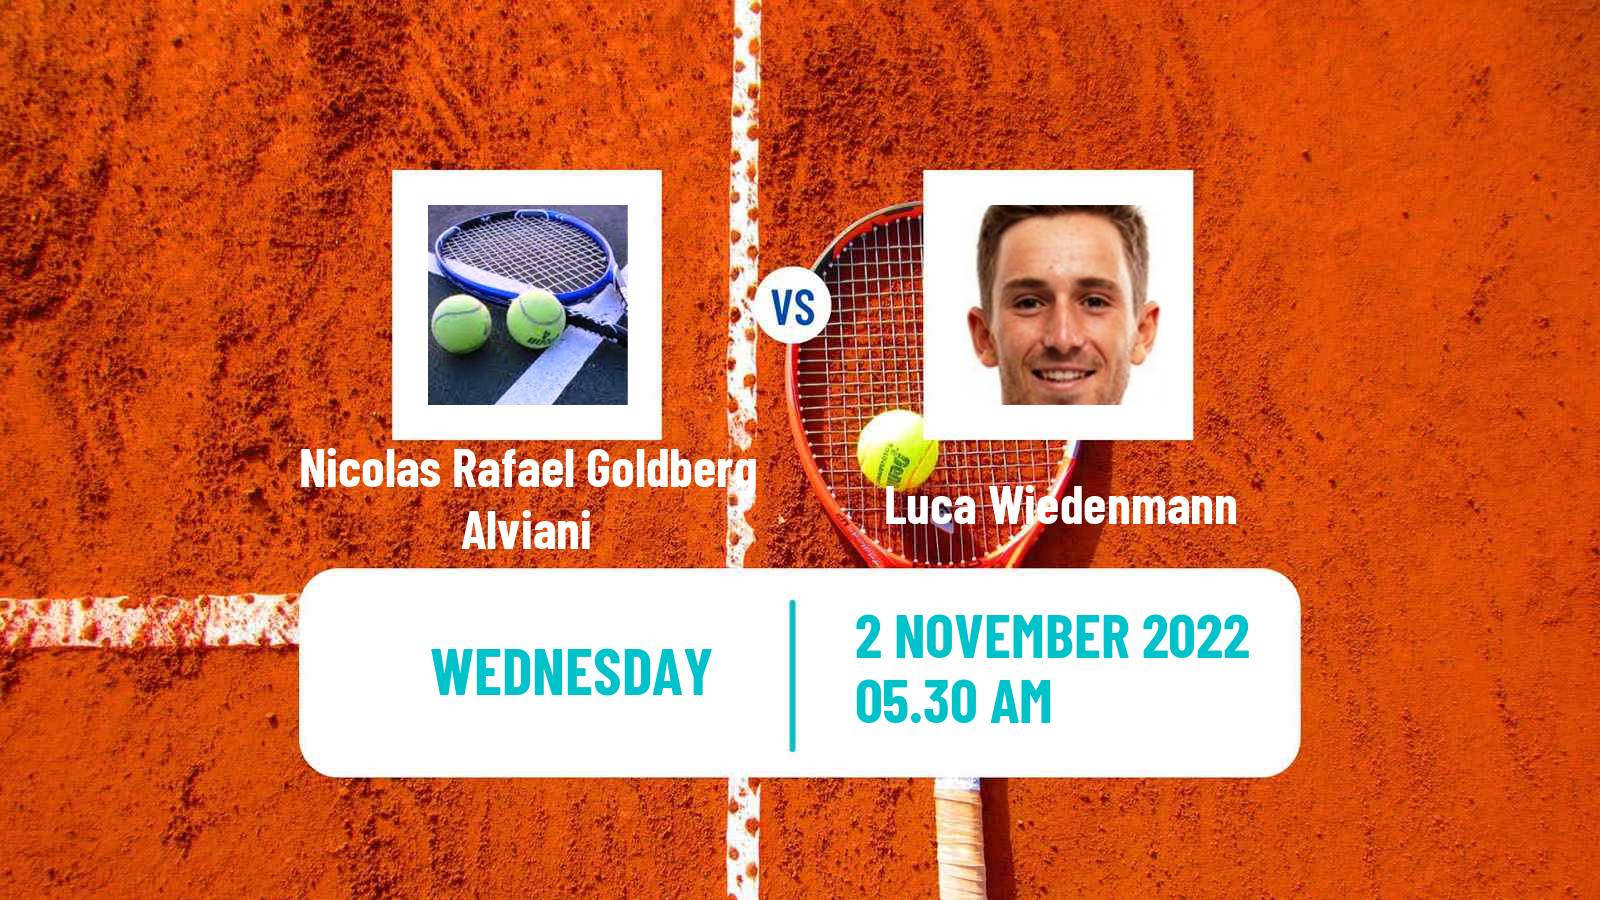 Tennis ITF Tournaments Nicolas Rafael Goldberg Alviani - Luca Wiedenmann